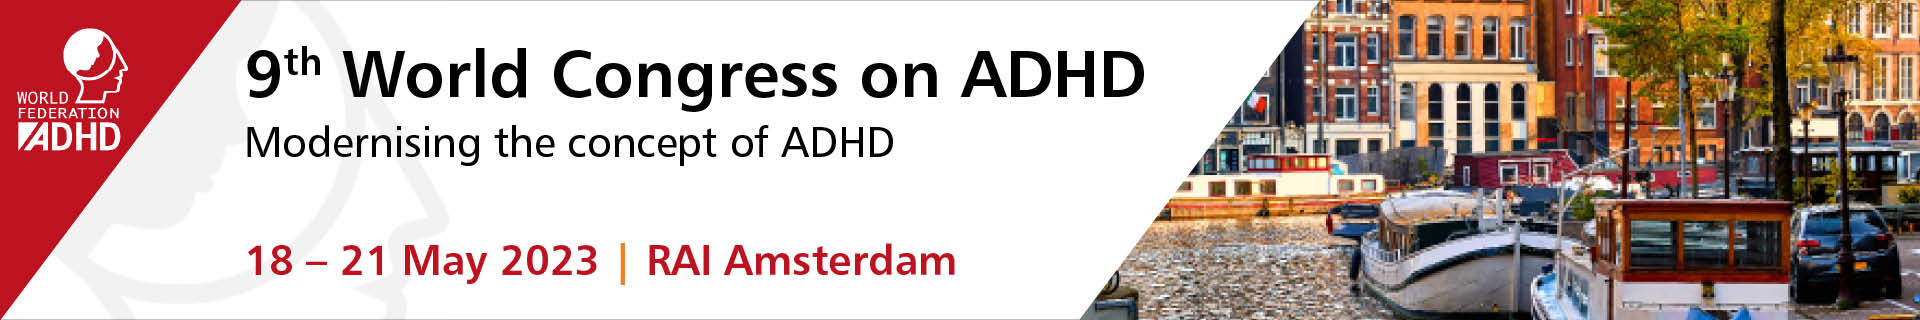 ADHD Congress 2023